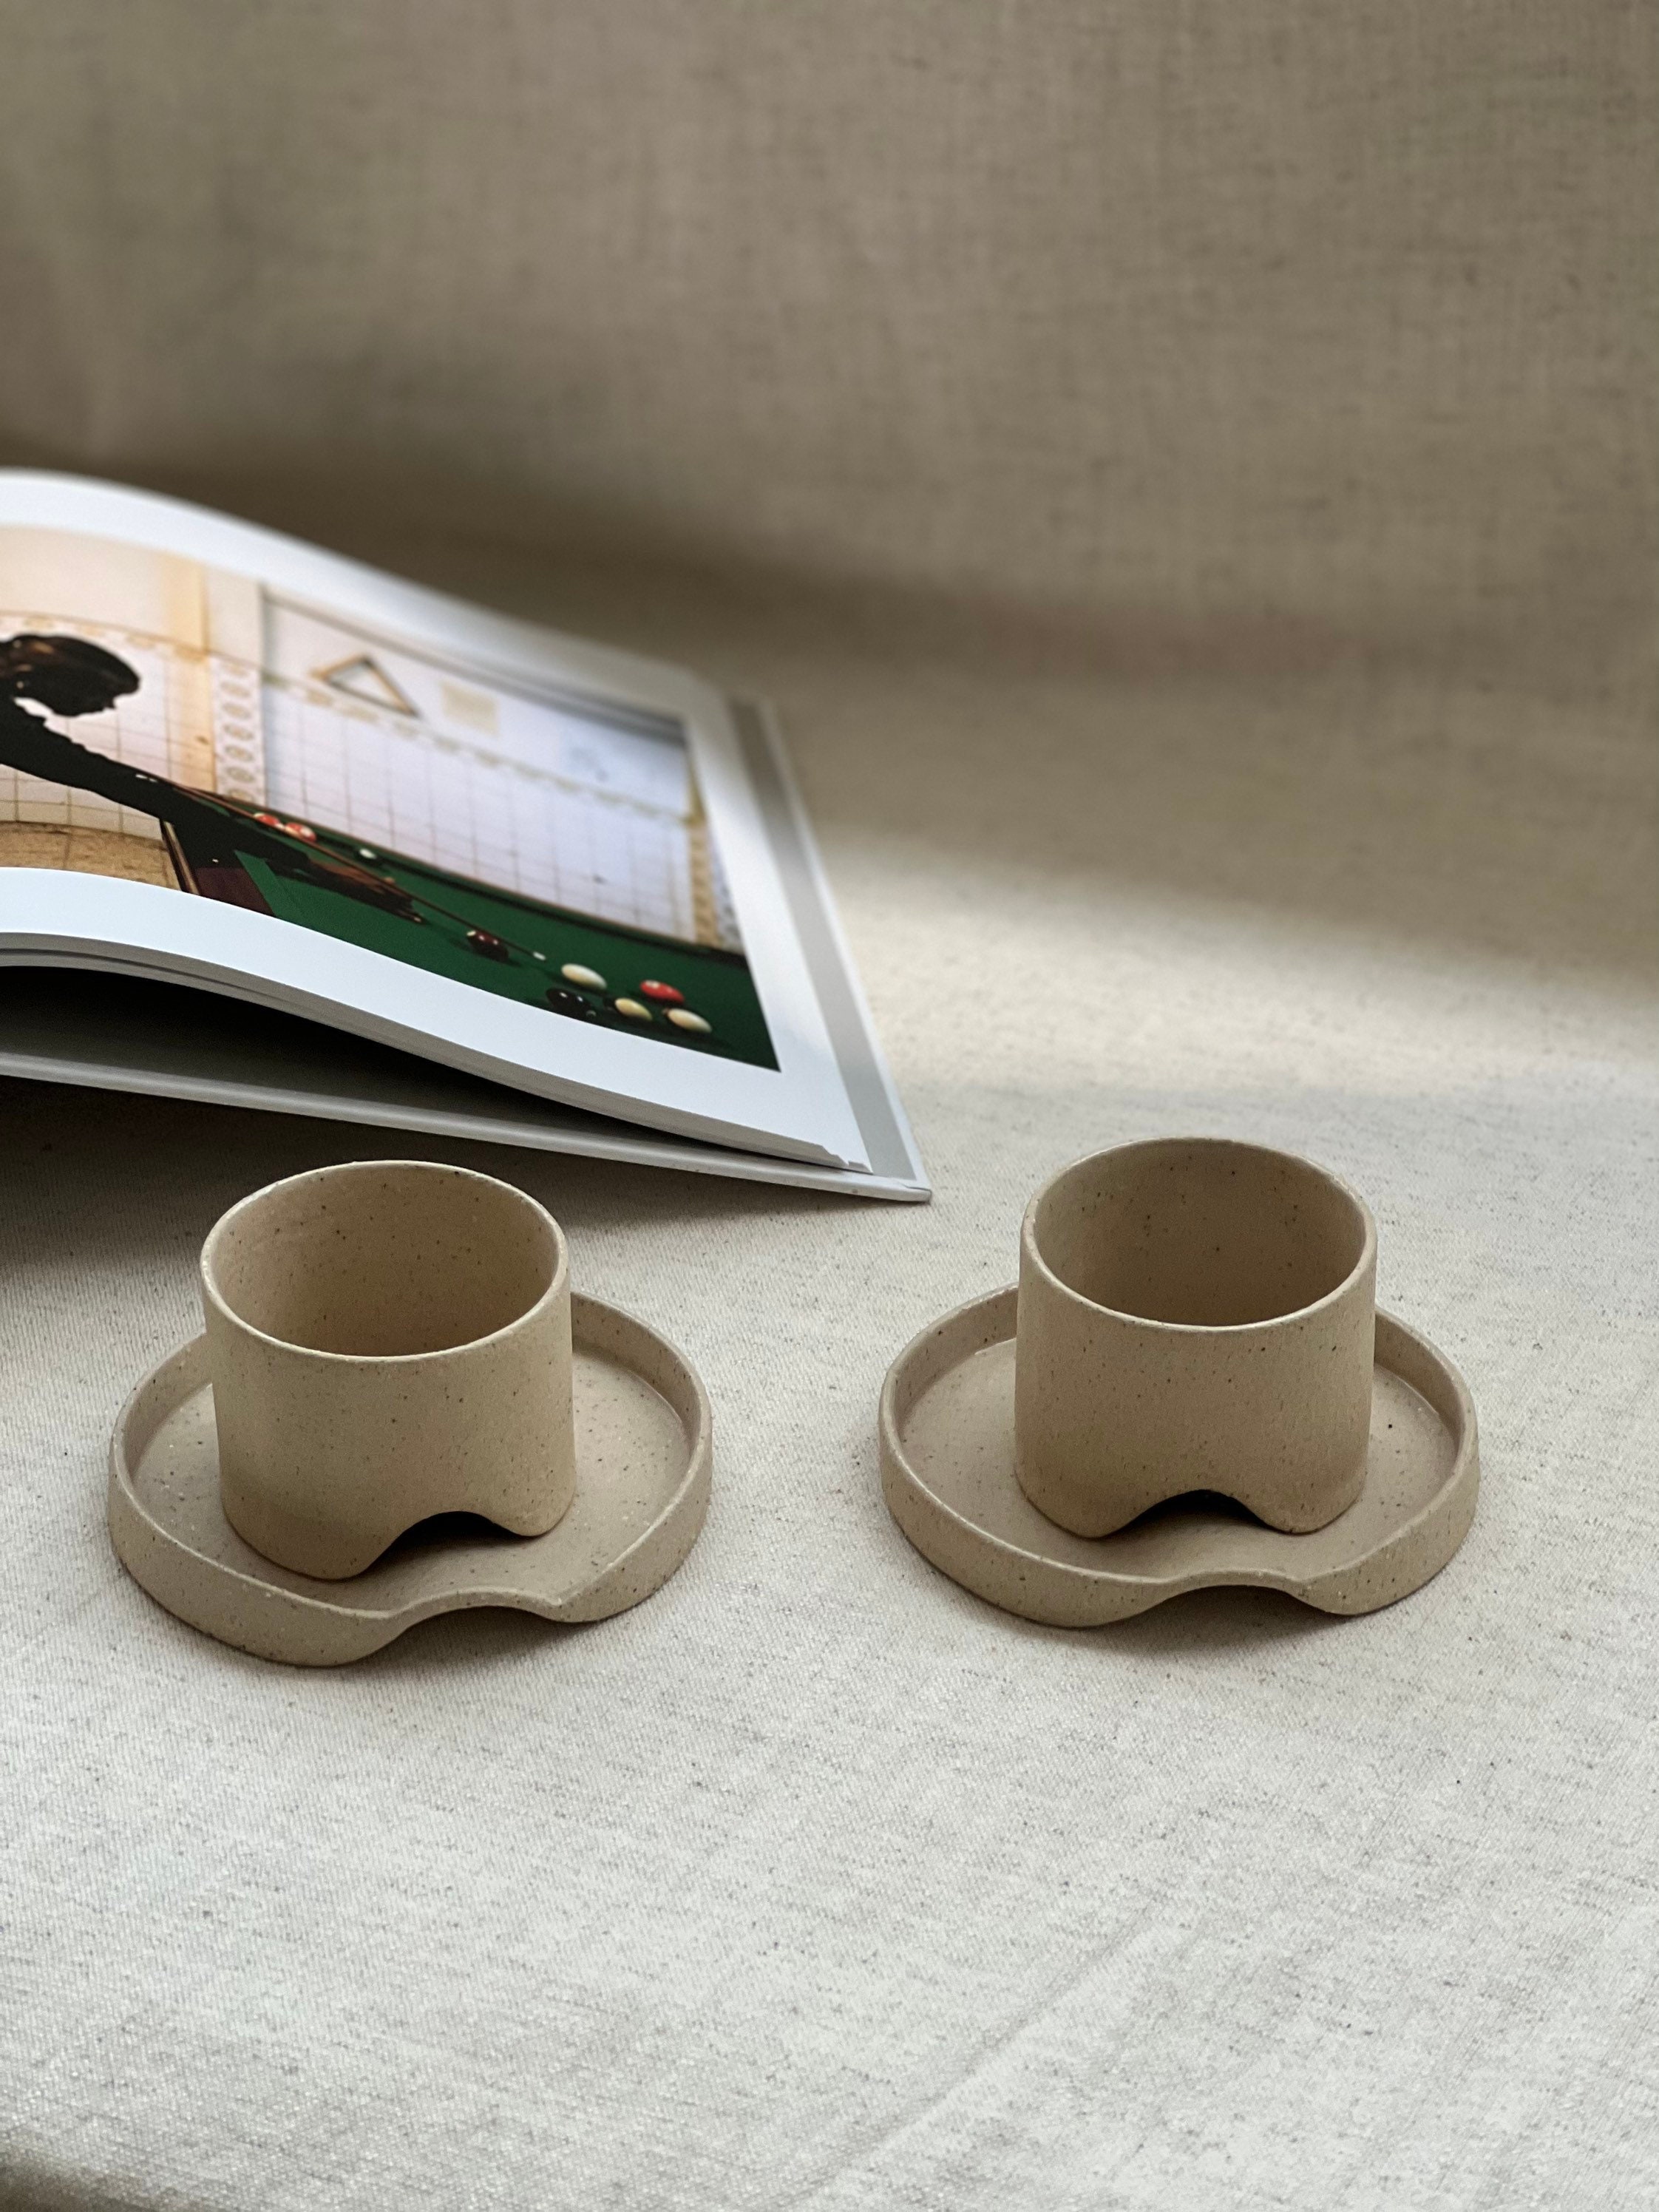 2 Oz / 60 Ml Beige Espresso Cup With Saucer, Modern Minimalist Design Espresso  Cup, Contemporary Coffee Cup, Nordic Stoneware Ceramic Cup 